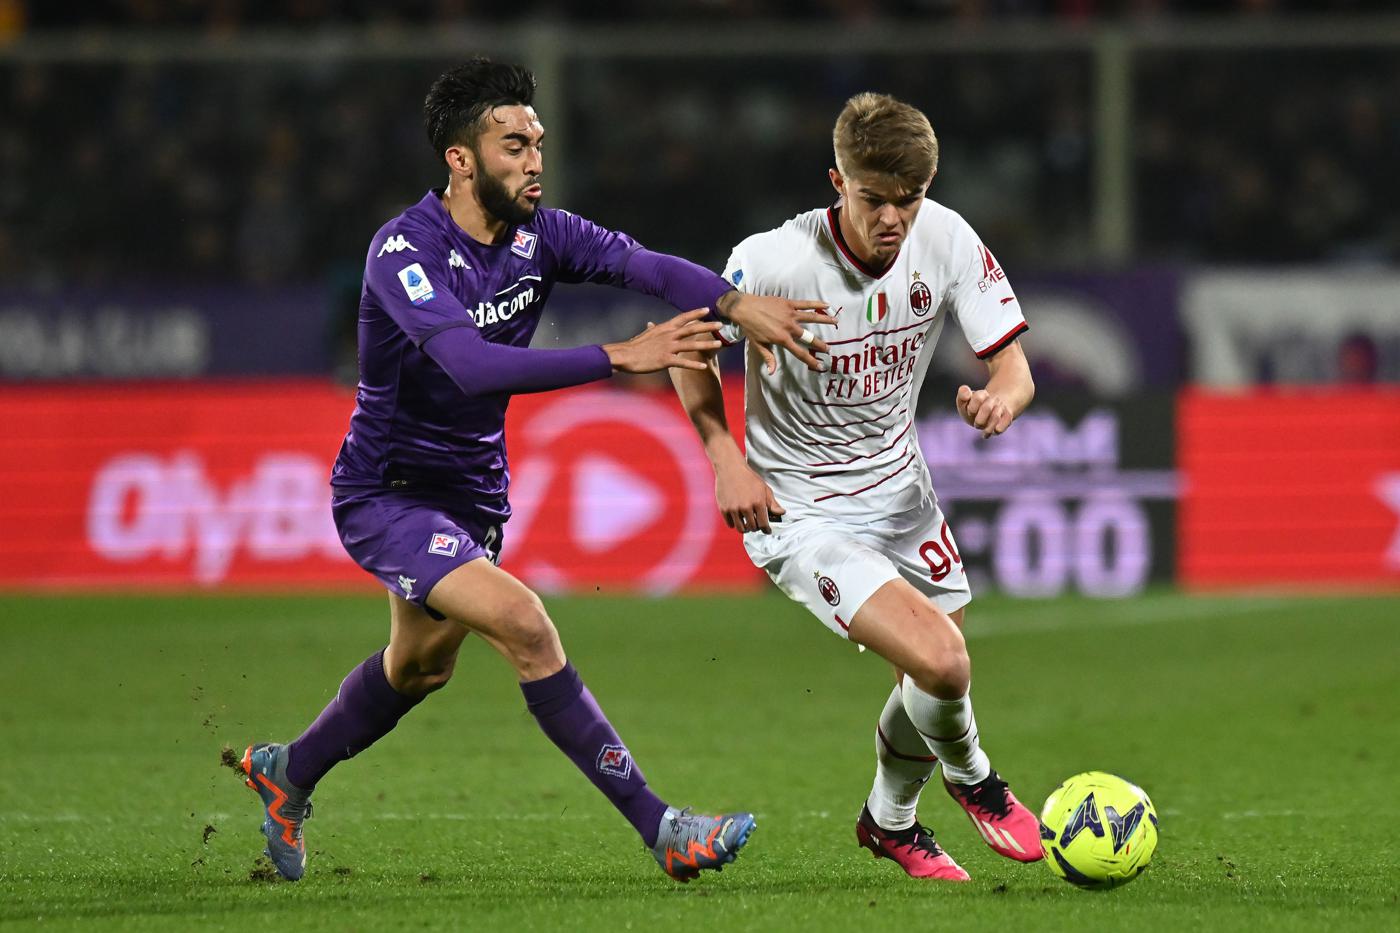 Fiorentina vs Milan - 2-1. Italian Championship, 25th round. Match review, statistics